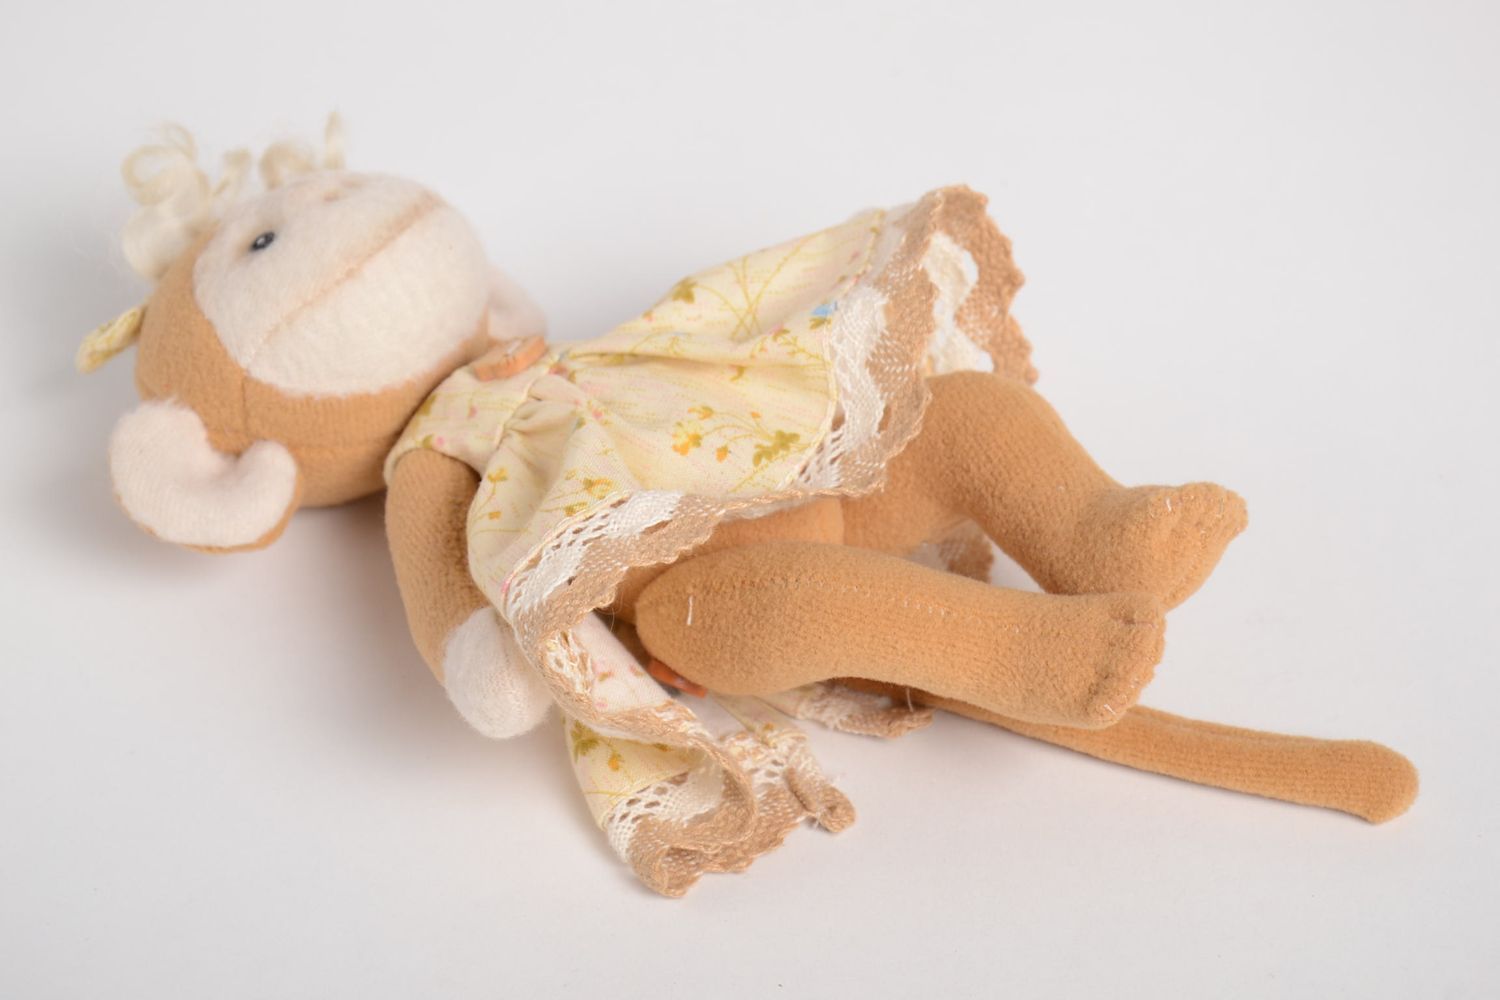 Handmade soft toy monkey stuffed toy for children interior decor ideas photo 5